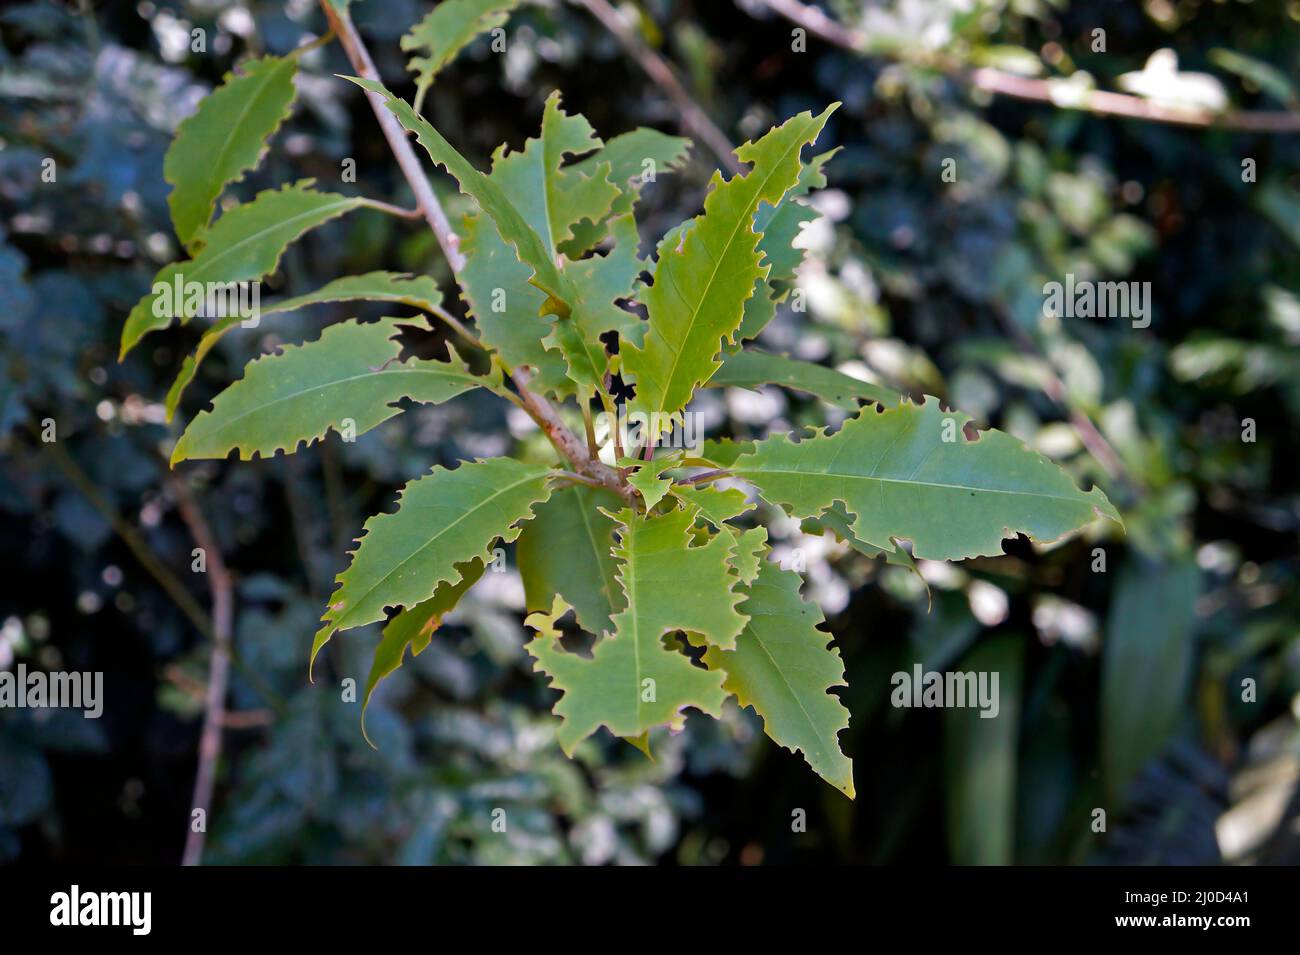 Tree leaves eaten by caterpillars Stock Photo